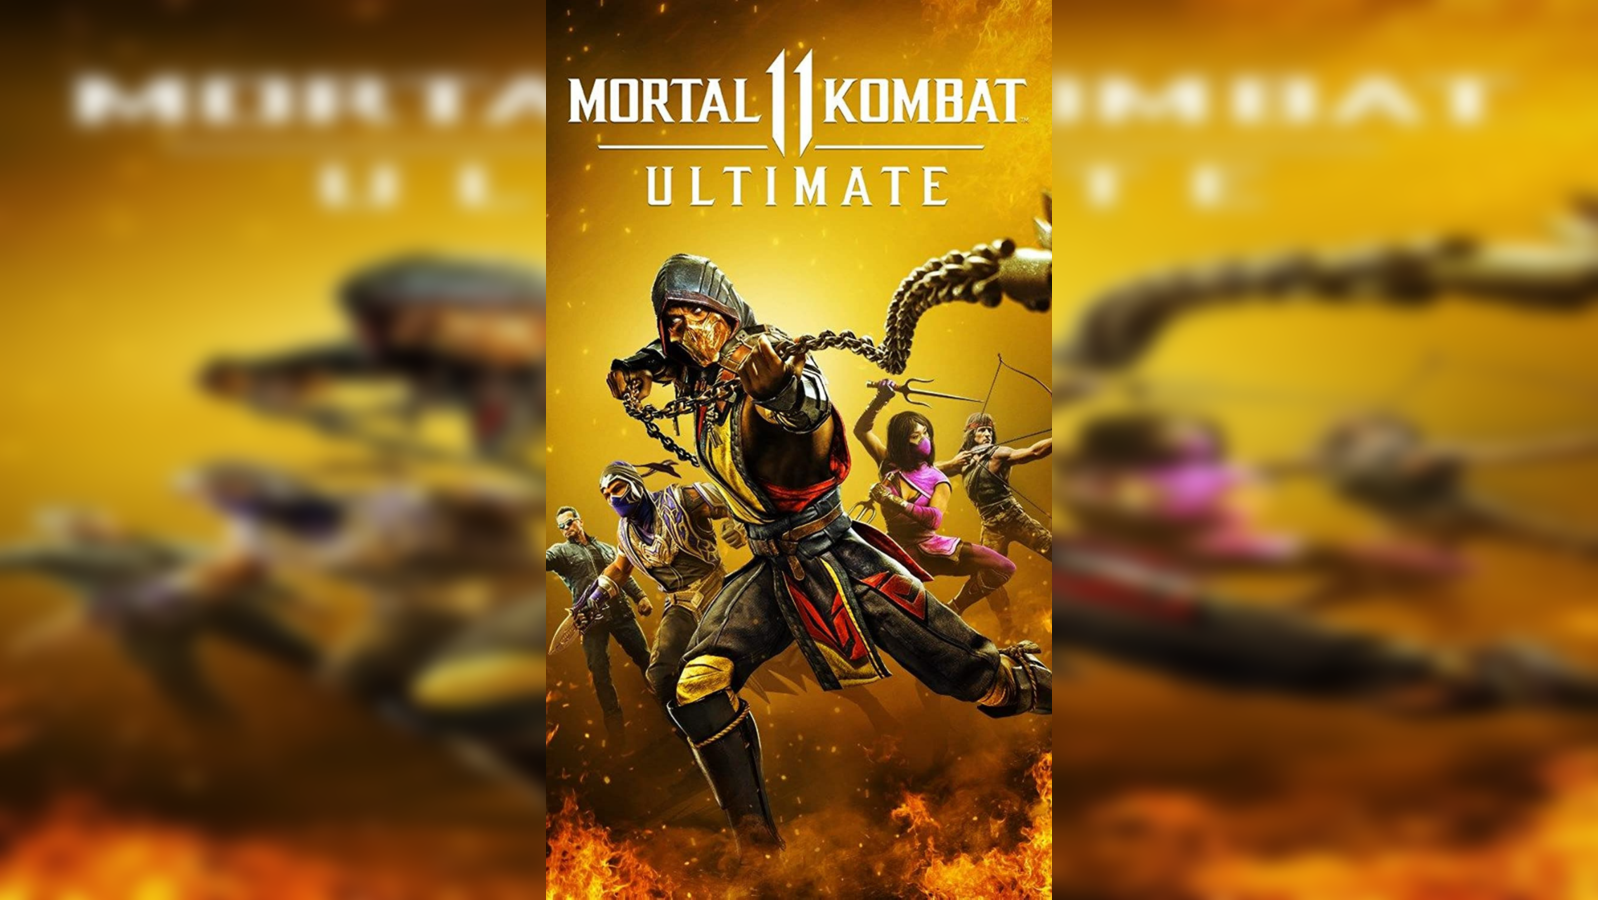 Mortal Kombat 1: Mortal Kombat 1 to release on Nintendo Switch, Xbox, PS5,  PC. Watch trailer - The Economic Times